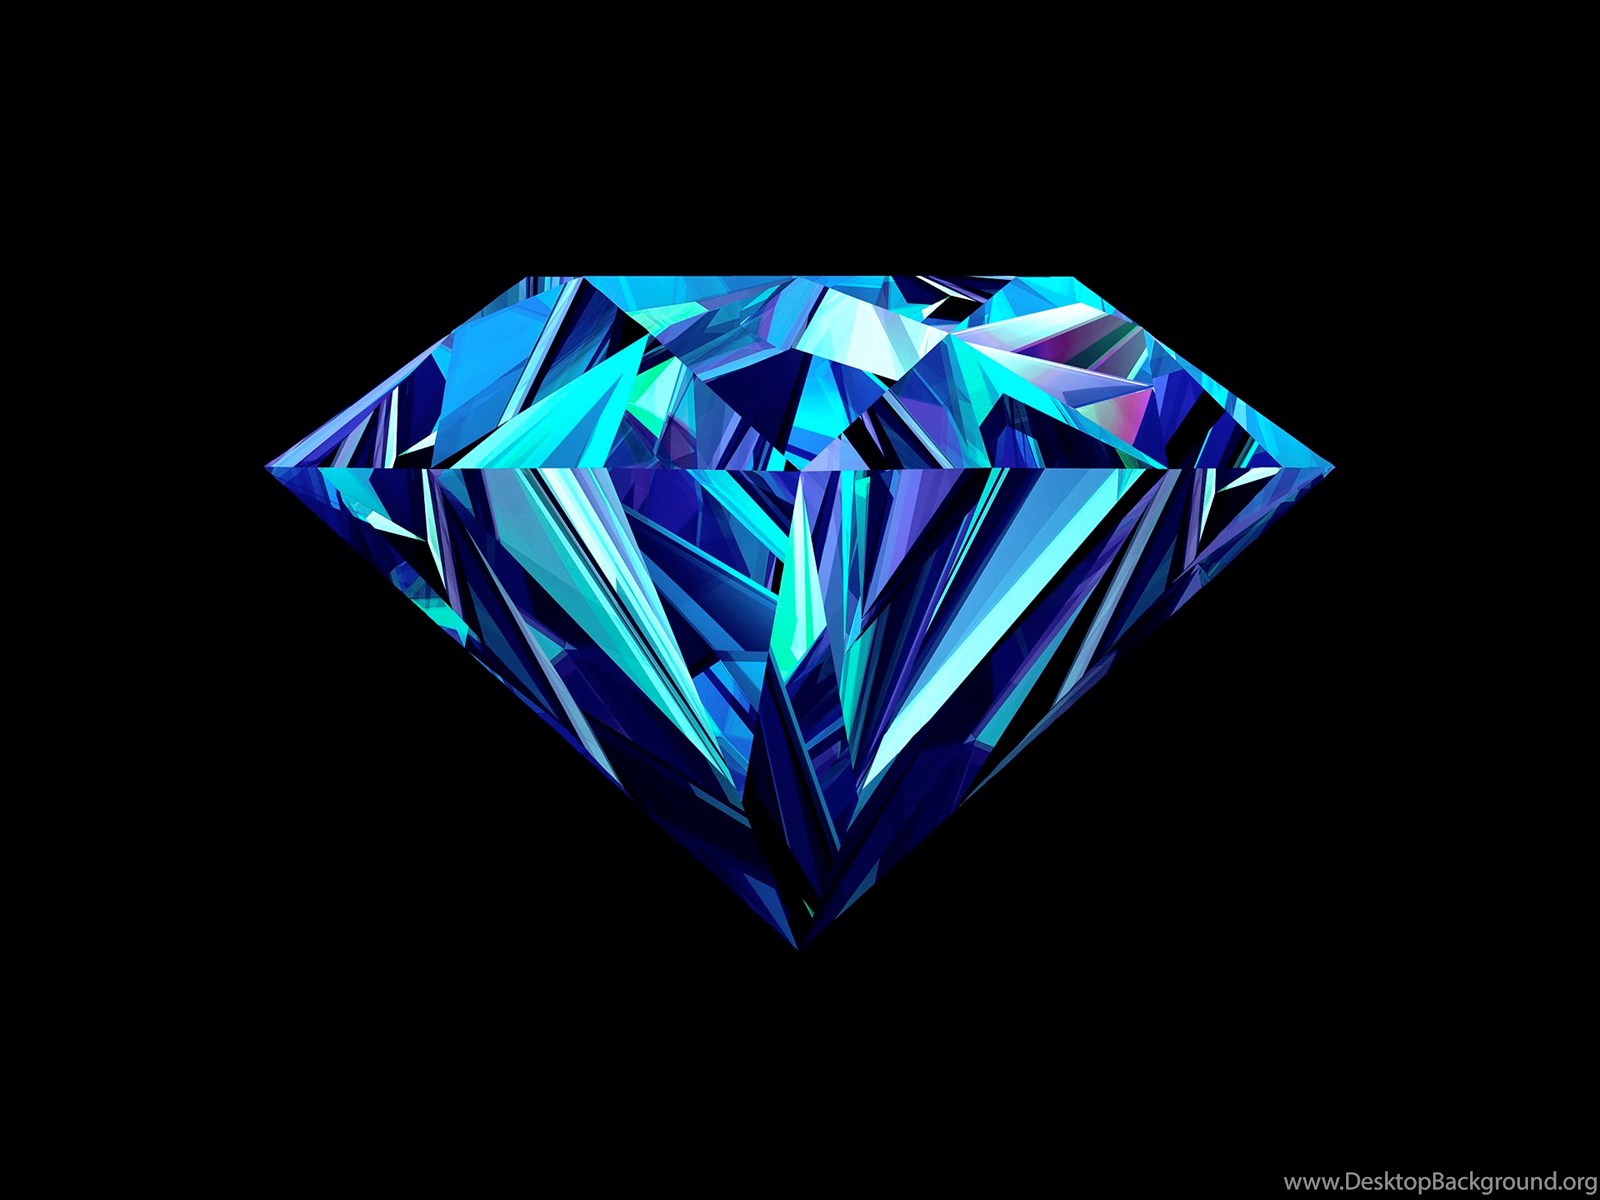 Av diamond. Кристал диамонд. Красивые бриллианты. Алмаз.